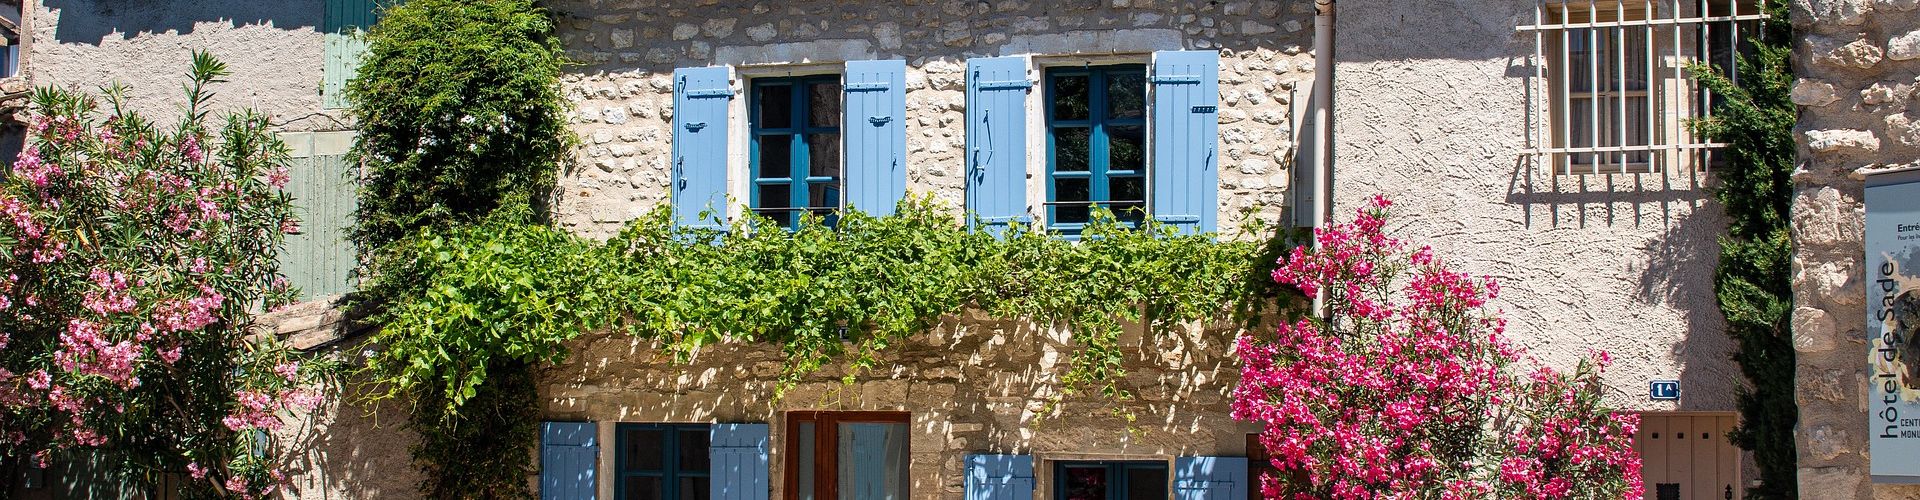 Maison arborée façade Salon de Provence